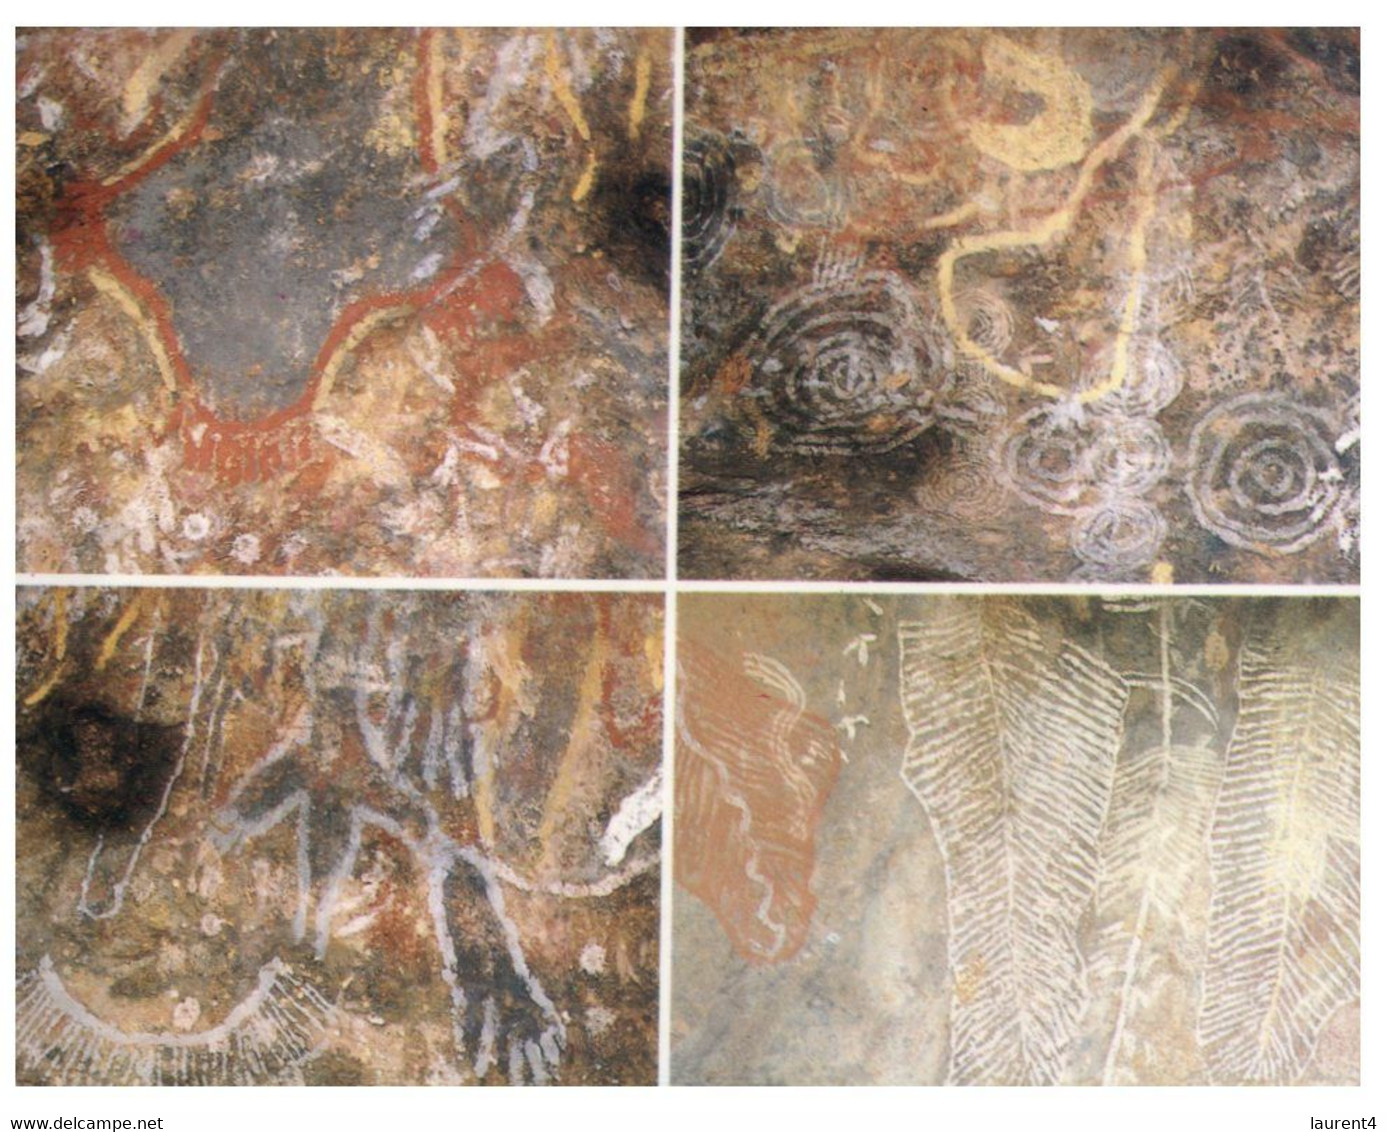 (V 9) Australia  - NT - Ayers Rock - Rock Paintings - Uluru & The Olgas